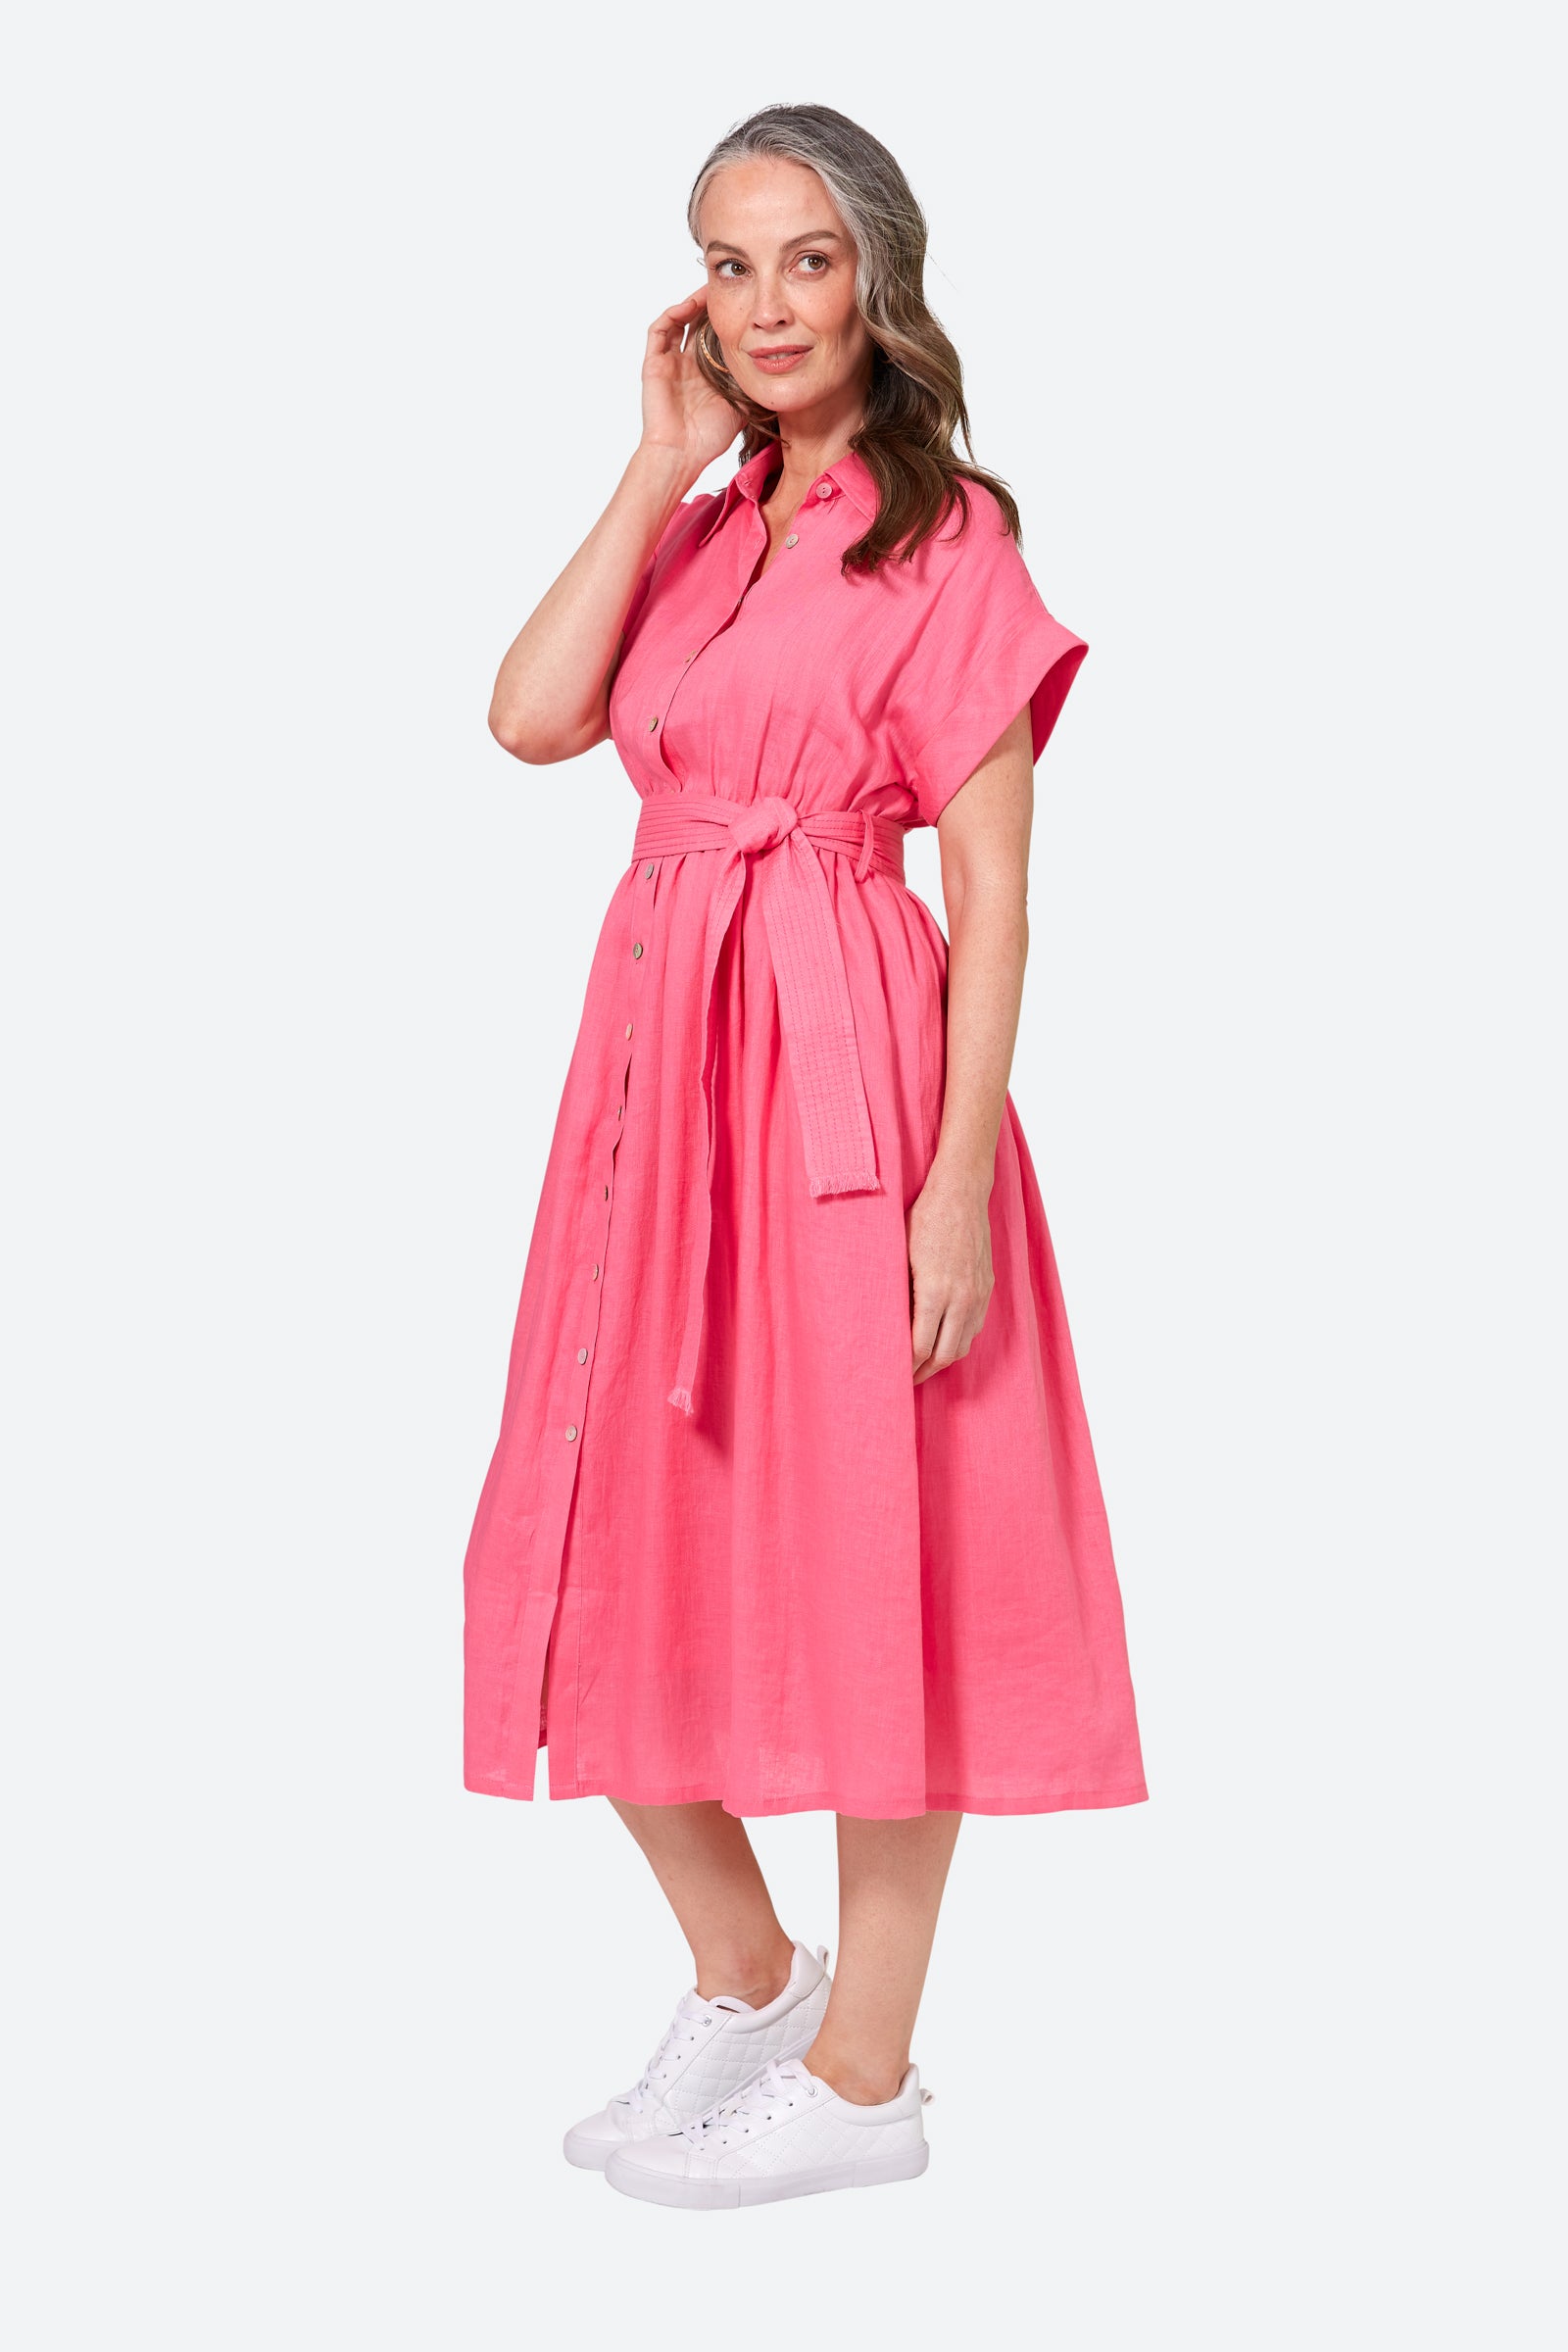 La Vie Shirt Dress - Candy - eb&ive Clothing - Shirt Dress Maxi Linen